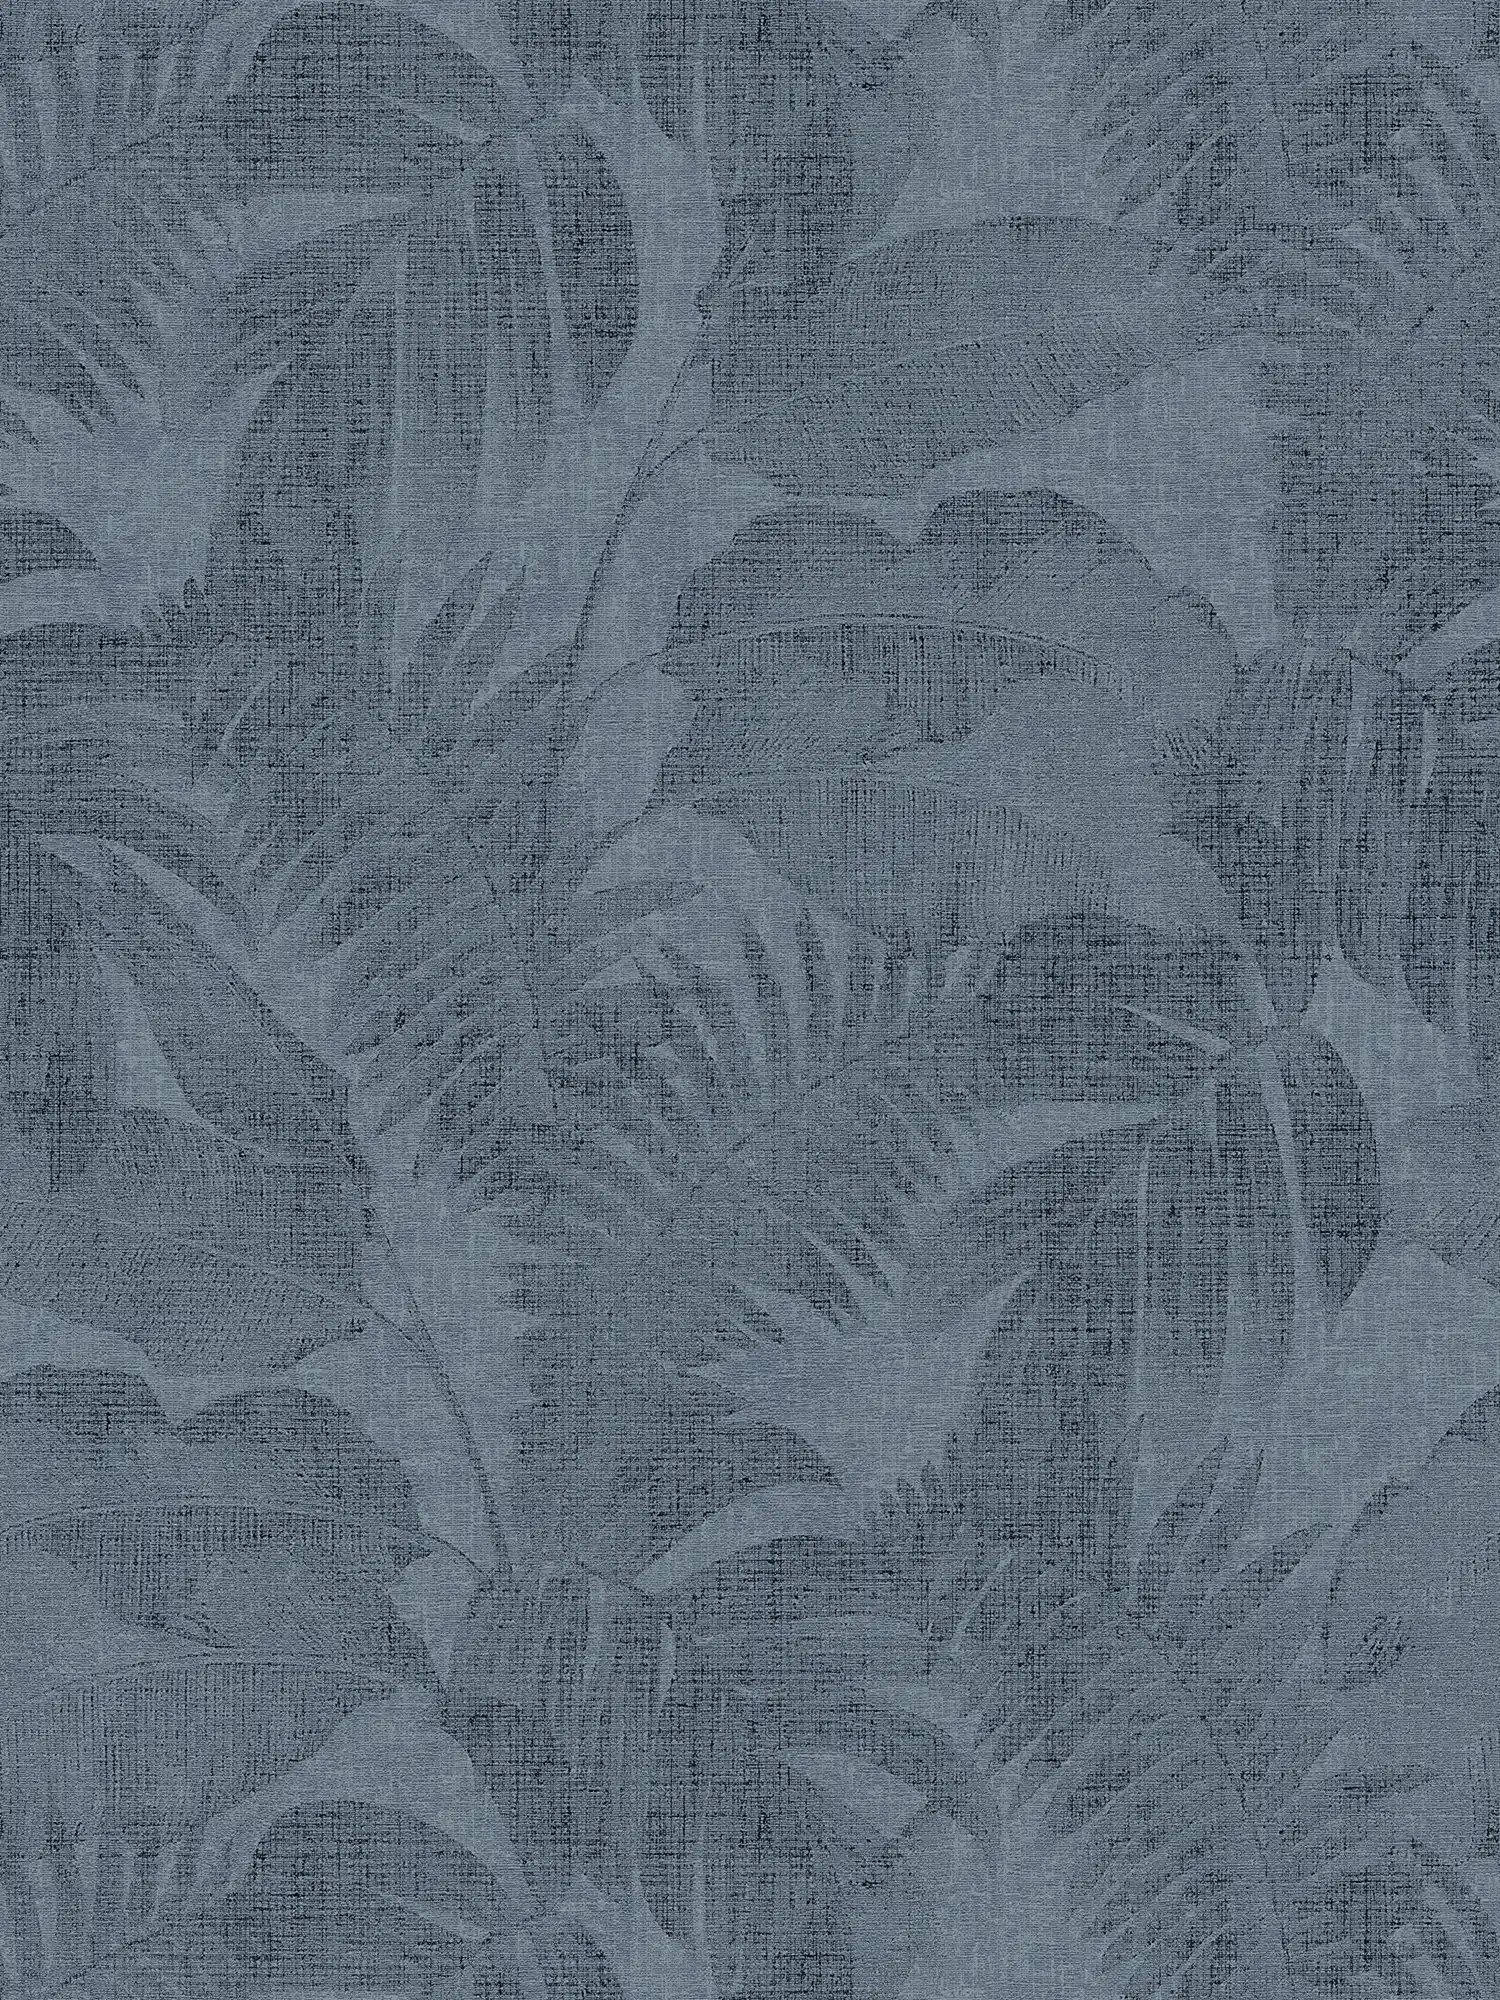 Boho jungle wallpaper with linen look - blue
